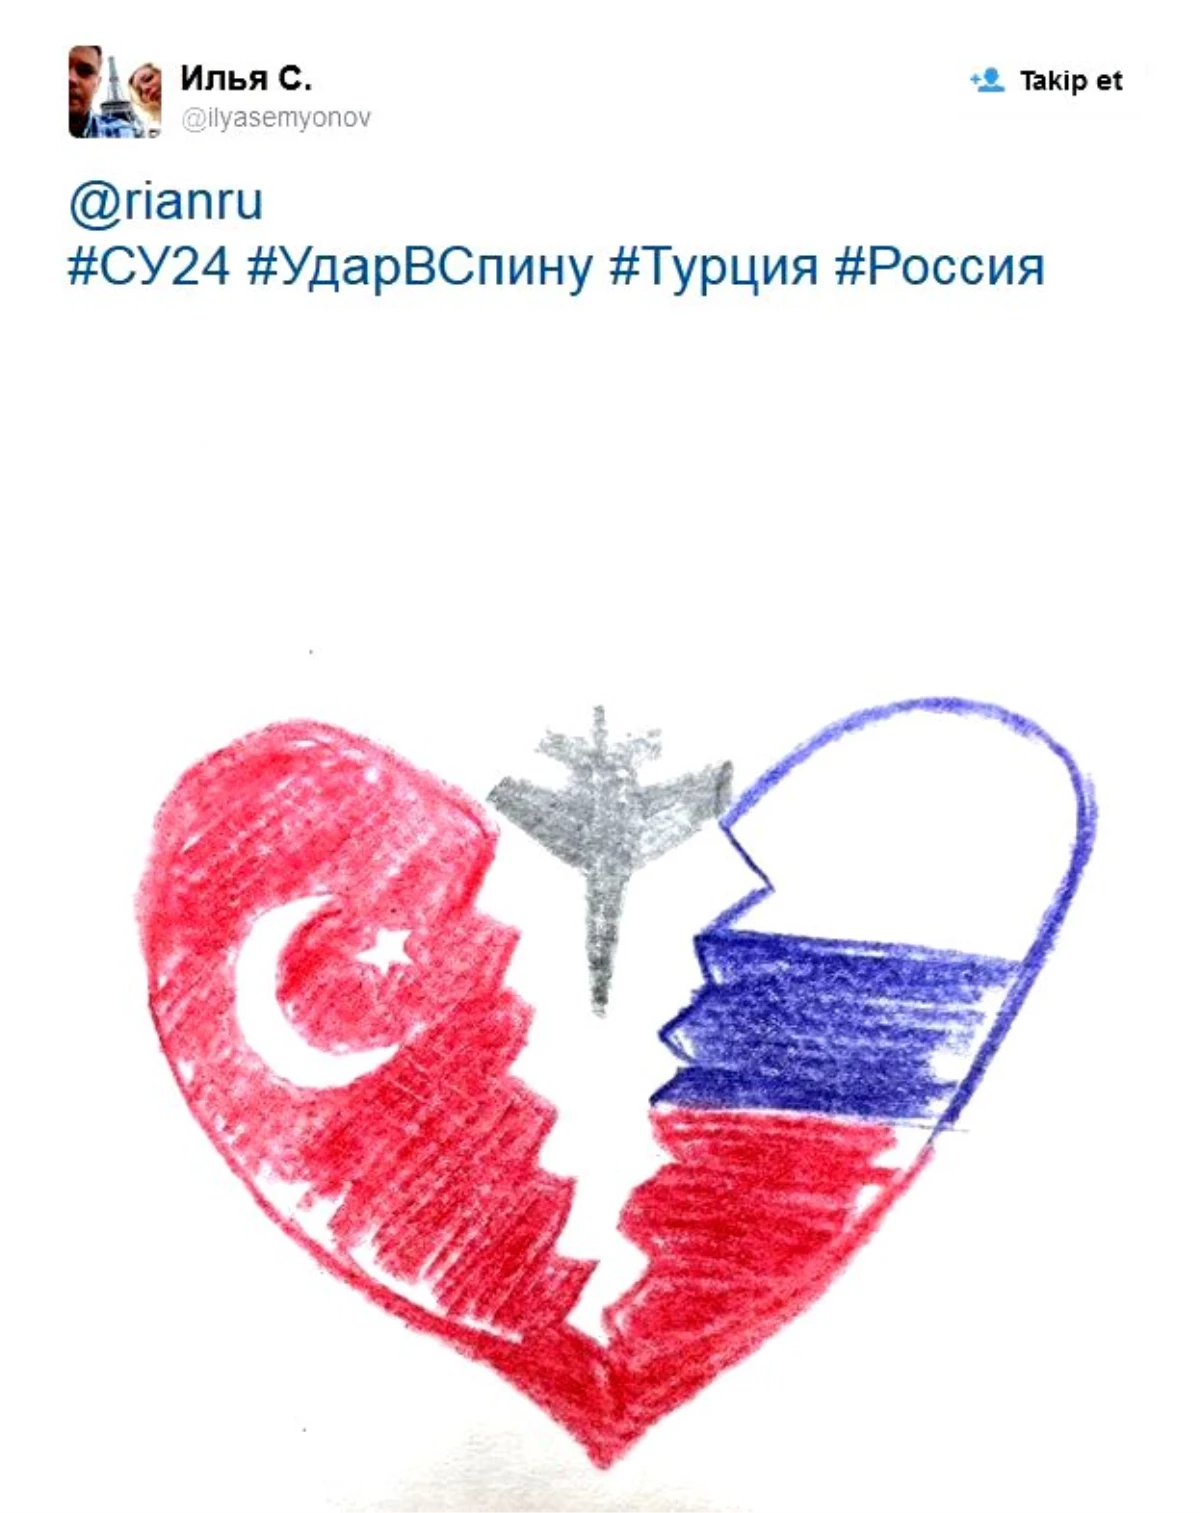 Ruslar Twitter\'da Türkiye\'ye Kin Kustu